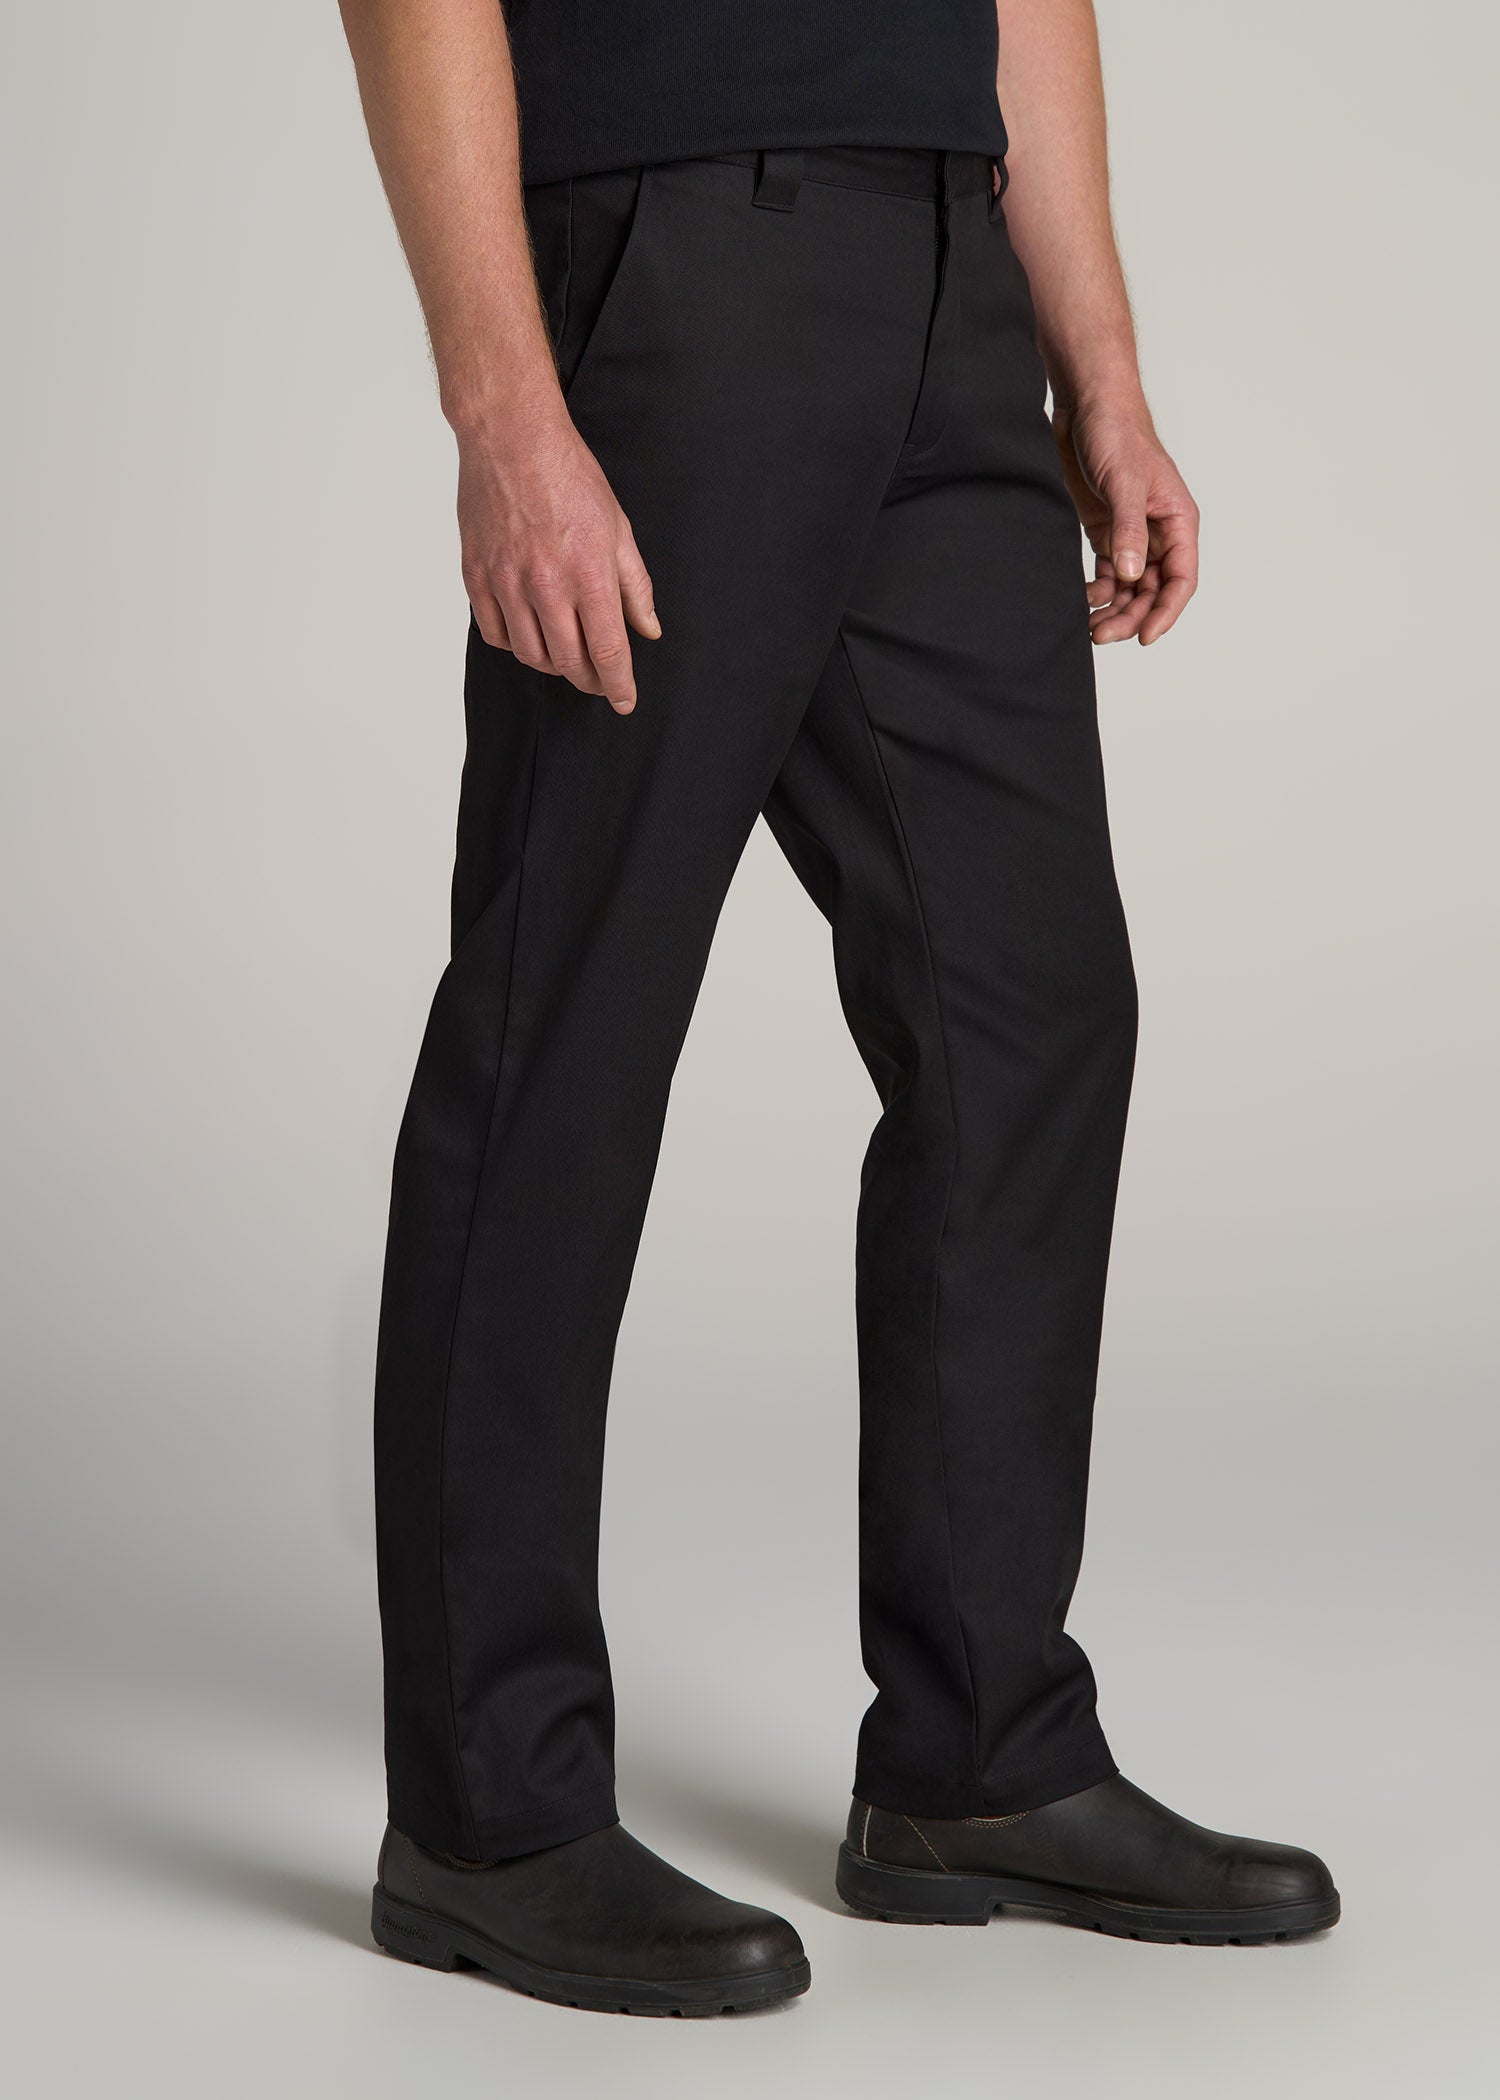 LJ&S Stretch Twill STRAIGHT-LEG Work Pants for Tall Men in Black